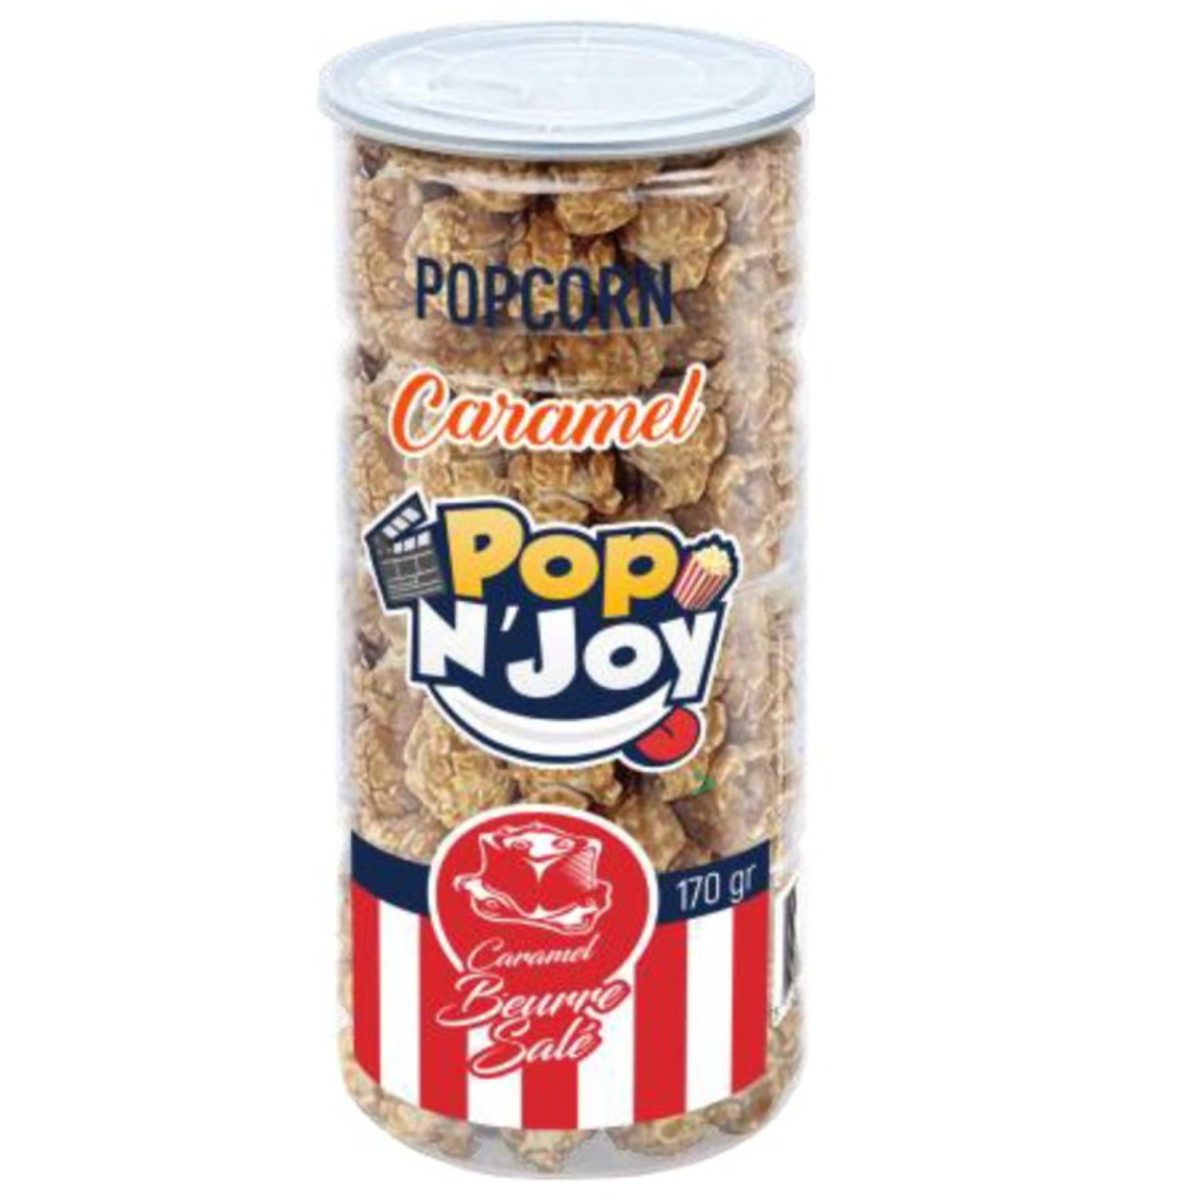 Popcorn Caramel Pop N' Joy (170g) 1